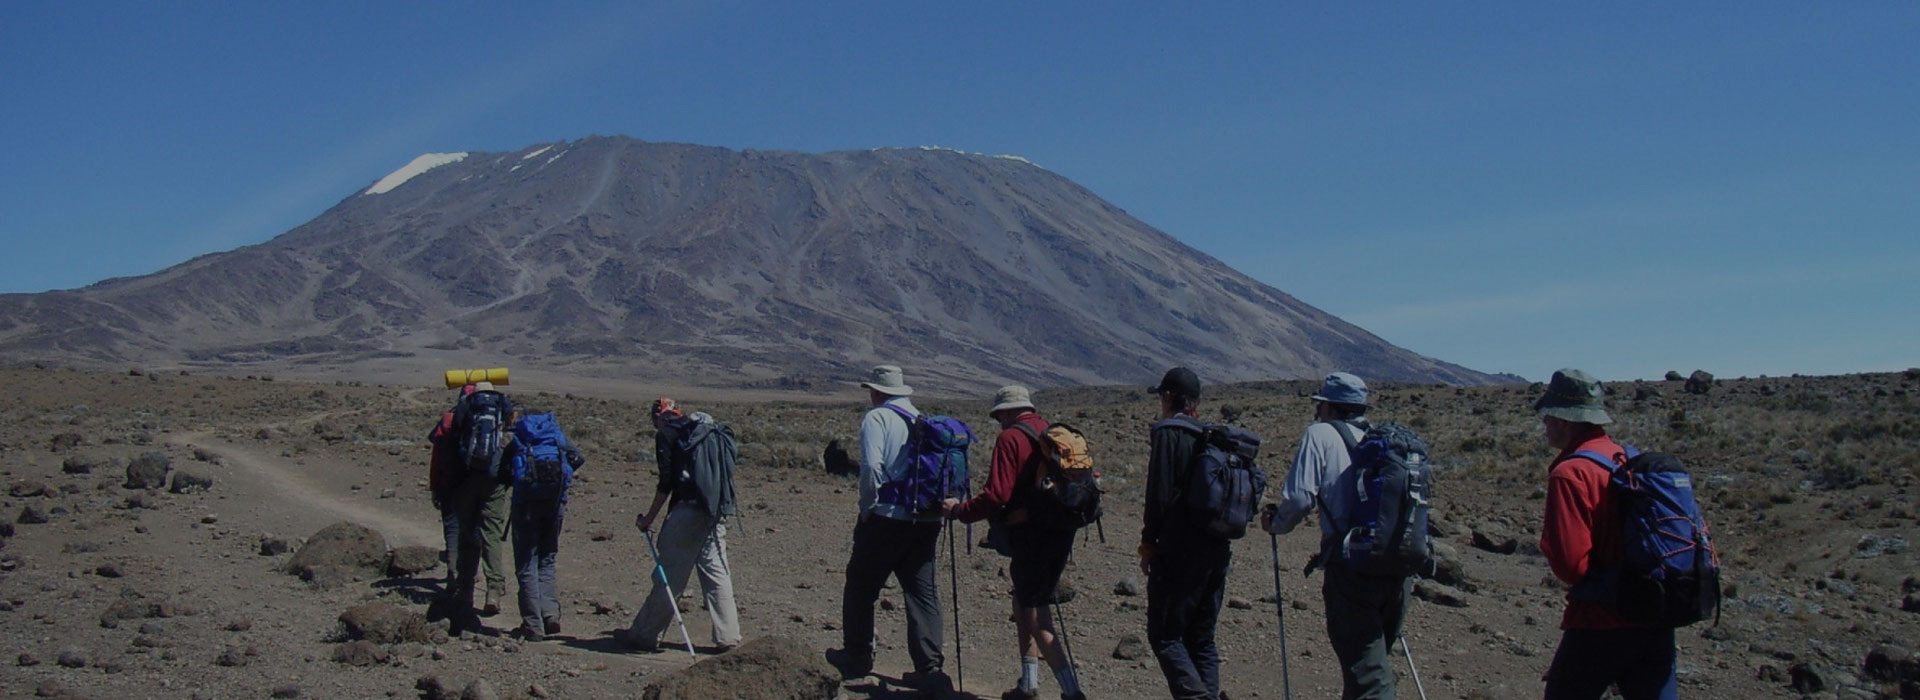 8 Days Umbwe Route Mount Kilimanjaro